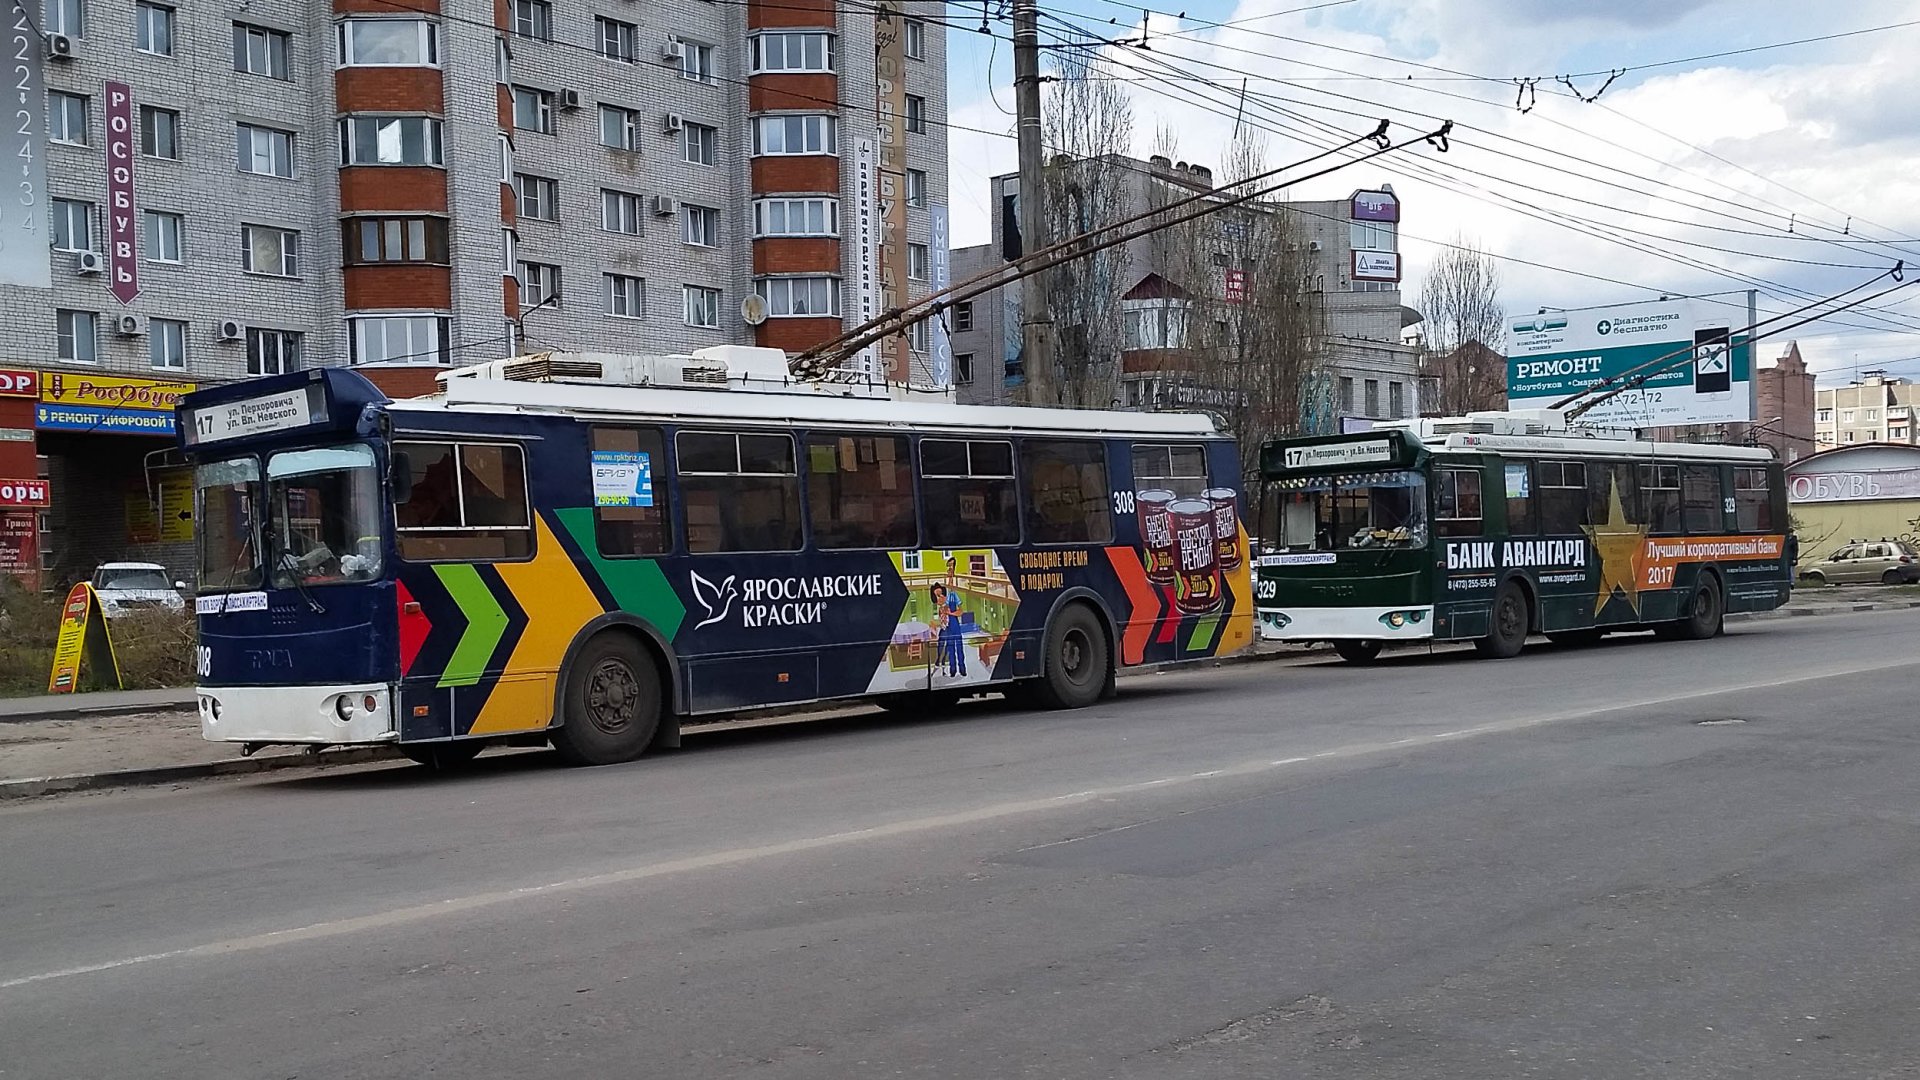 Брендирование троллейбусов, г.Владивосток